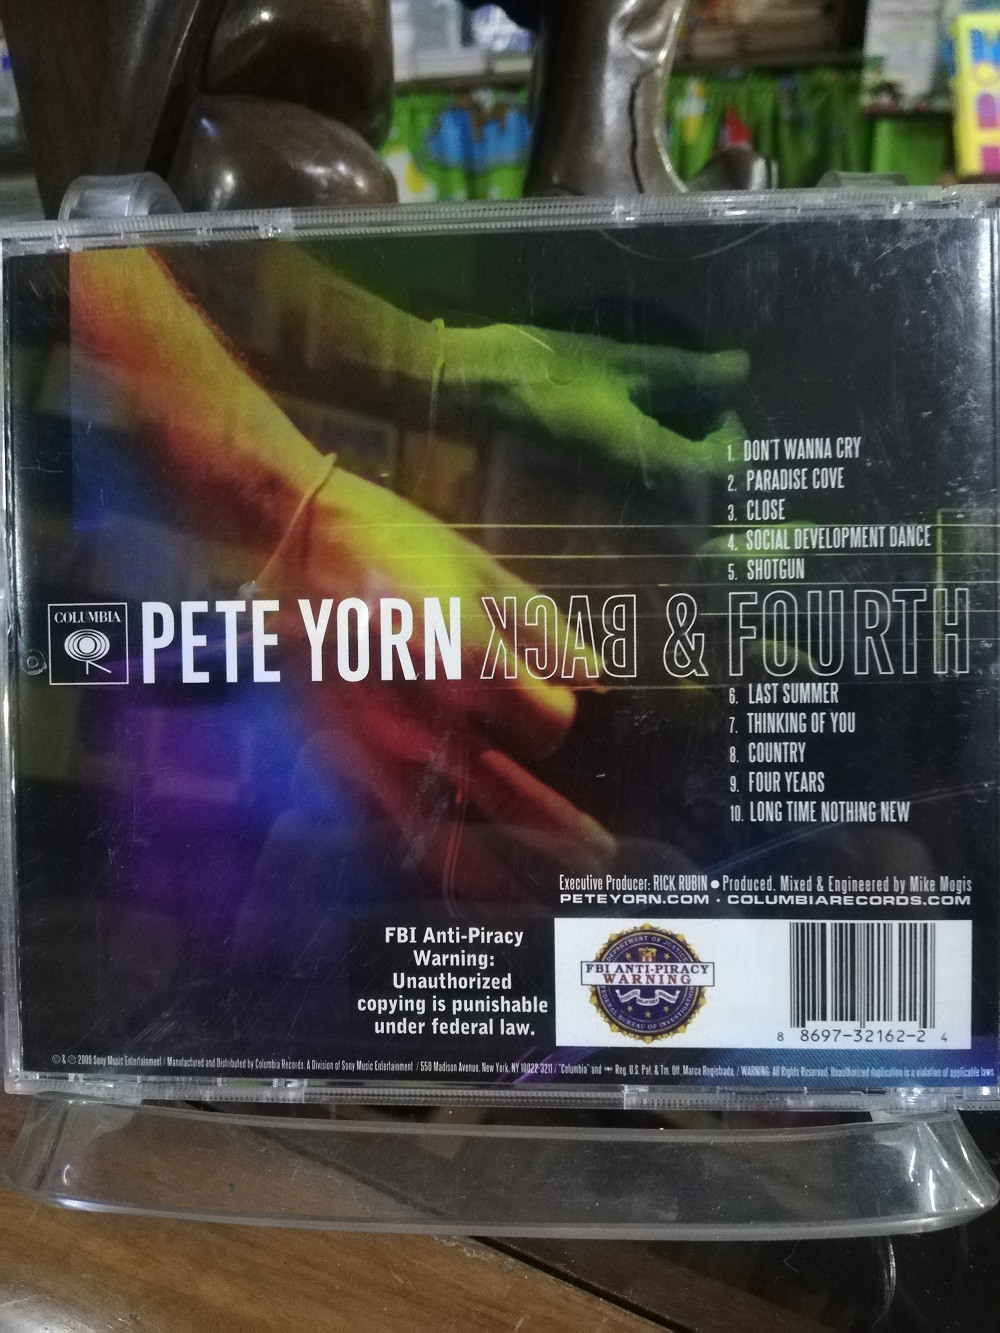 Imagen CD PETE YORN - BACK & FOURTH 2